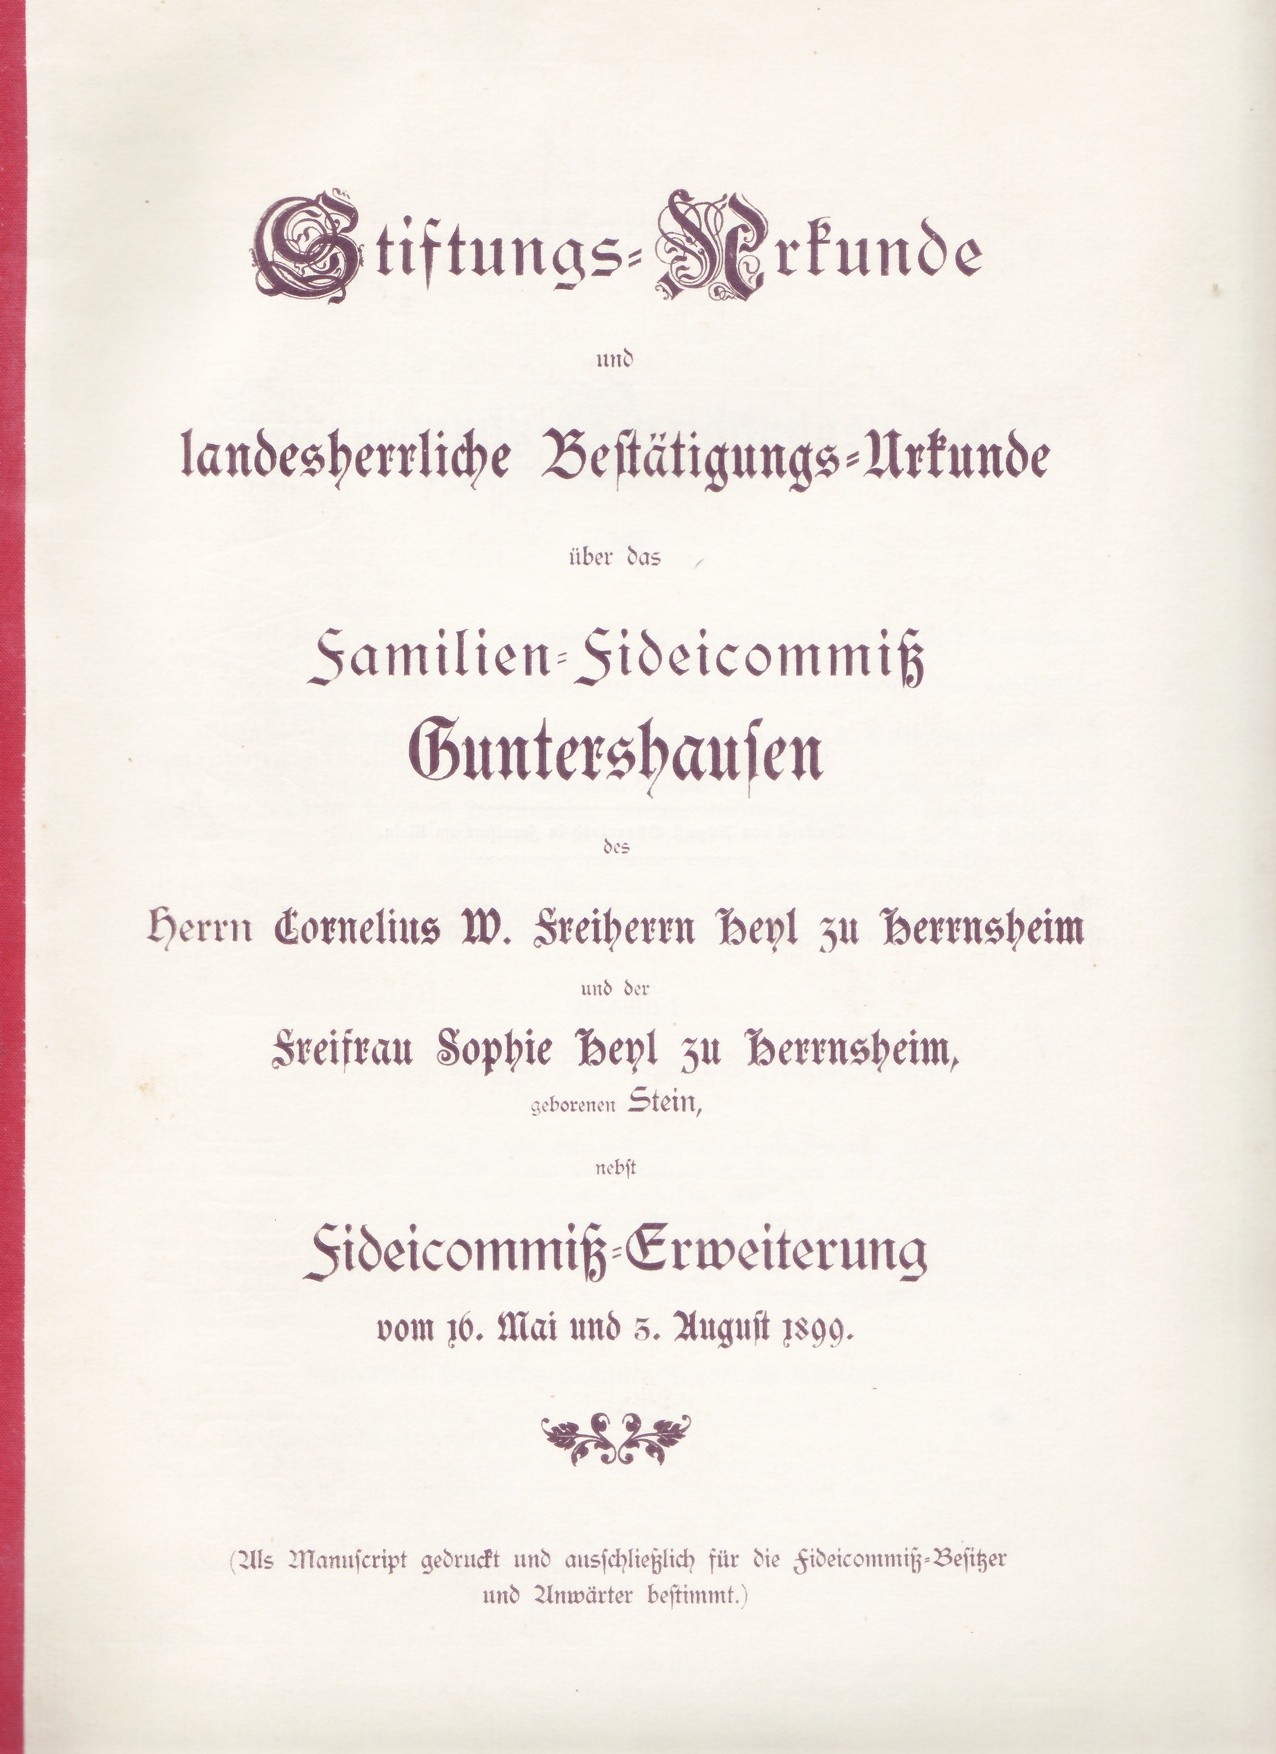 Stiftungs-Urkunde Fideicommiß Guntershausen (Kulturverein Guntersblum CC BY-NC-SA)